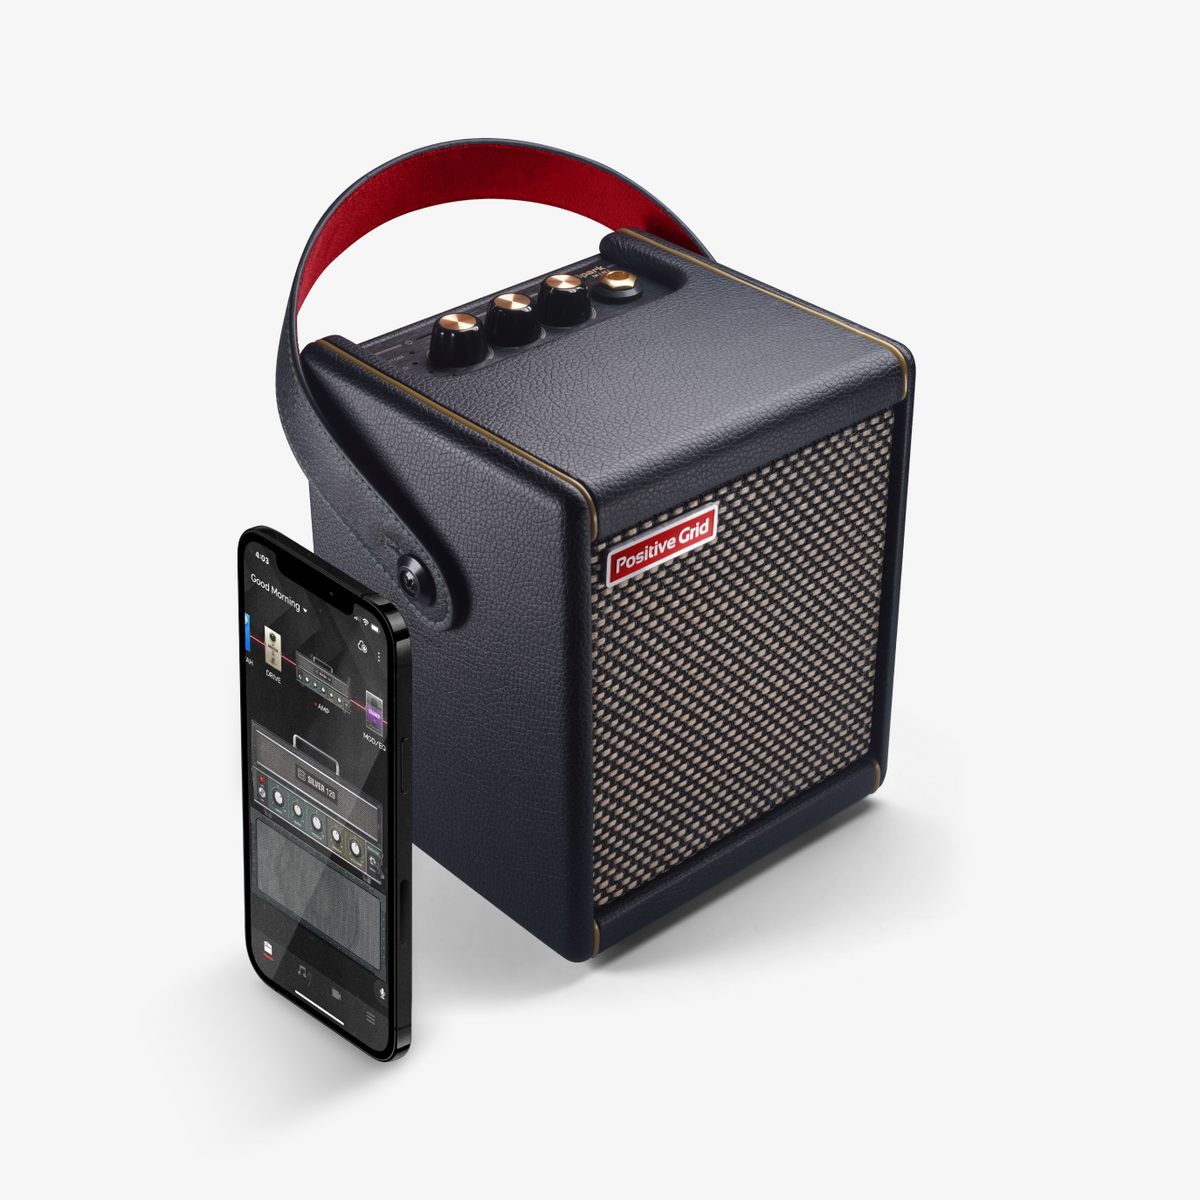 Spark MINI  Portable Smart Guitar Amp & Bluetooth Speaker